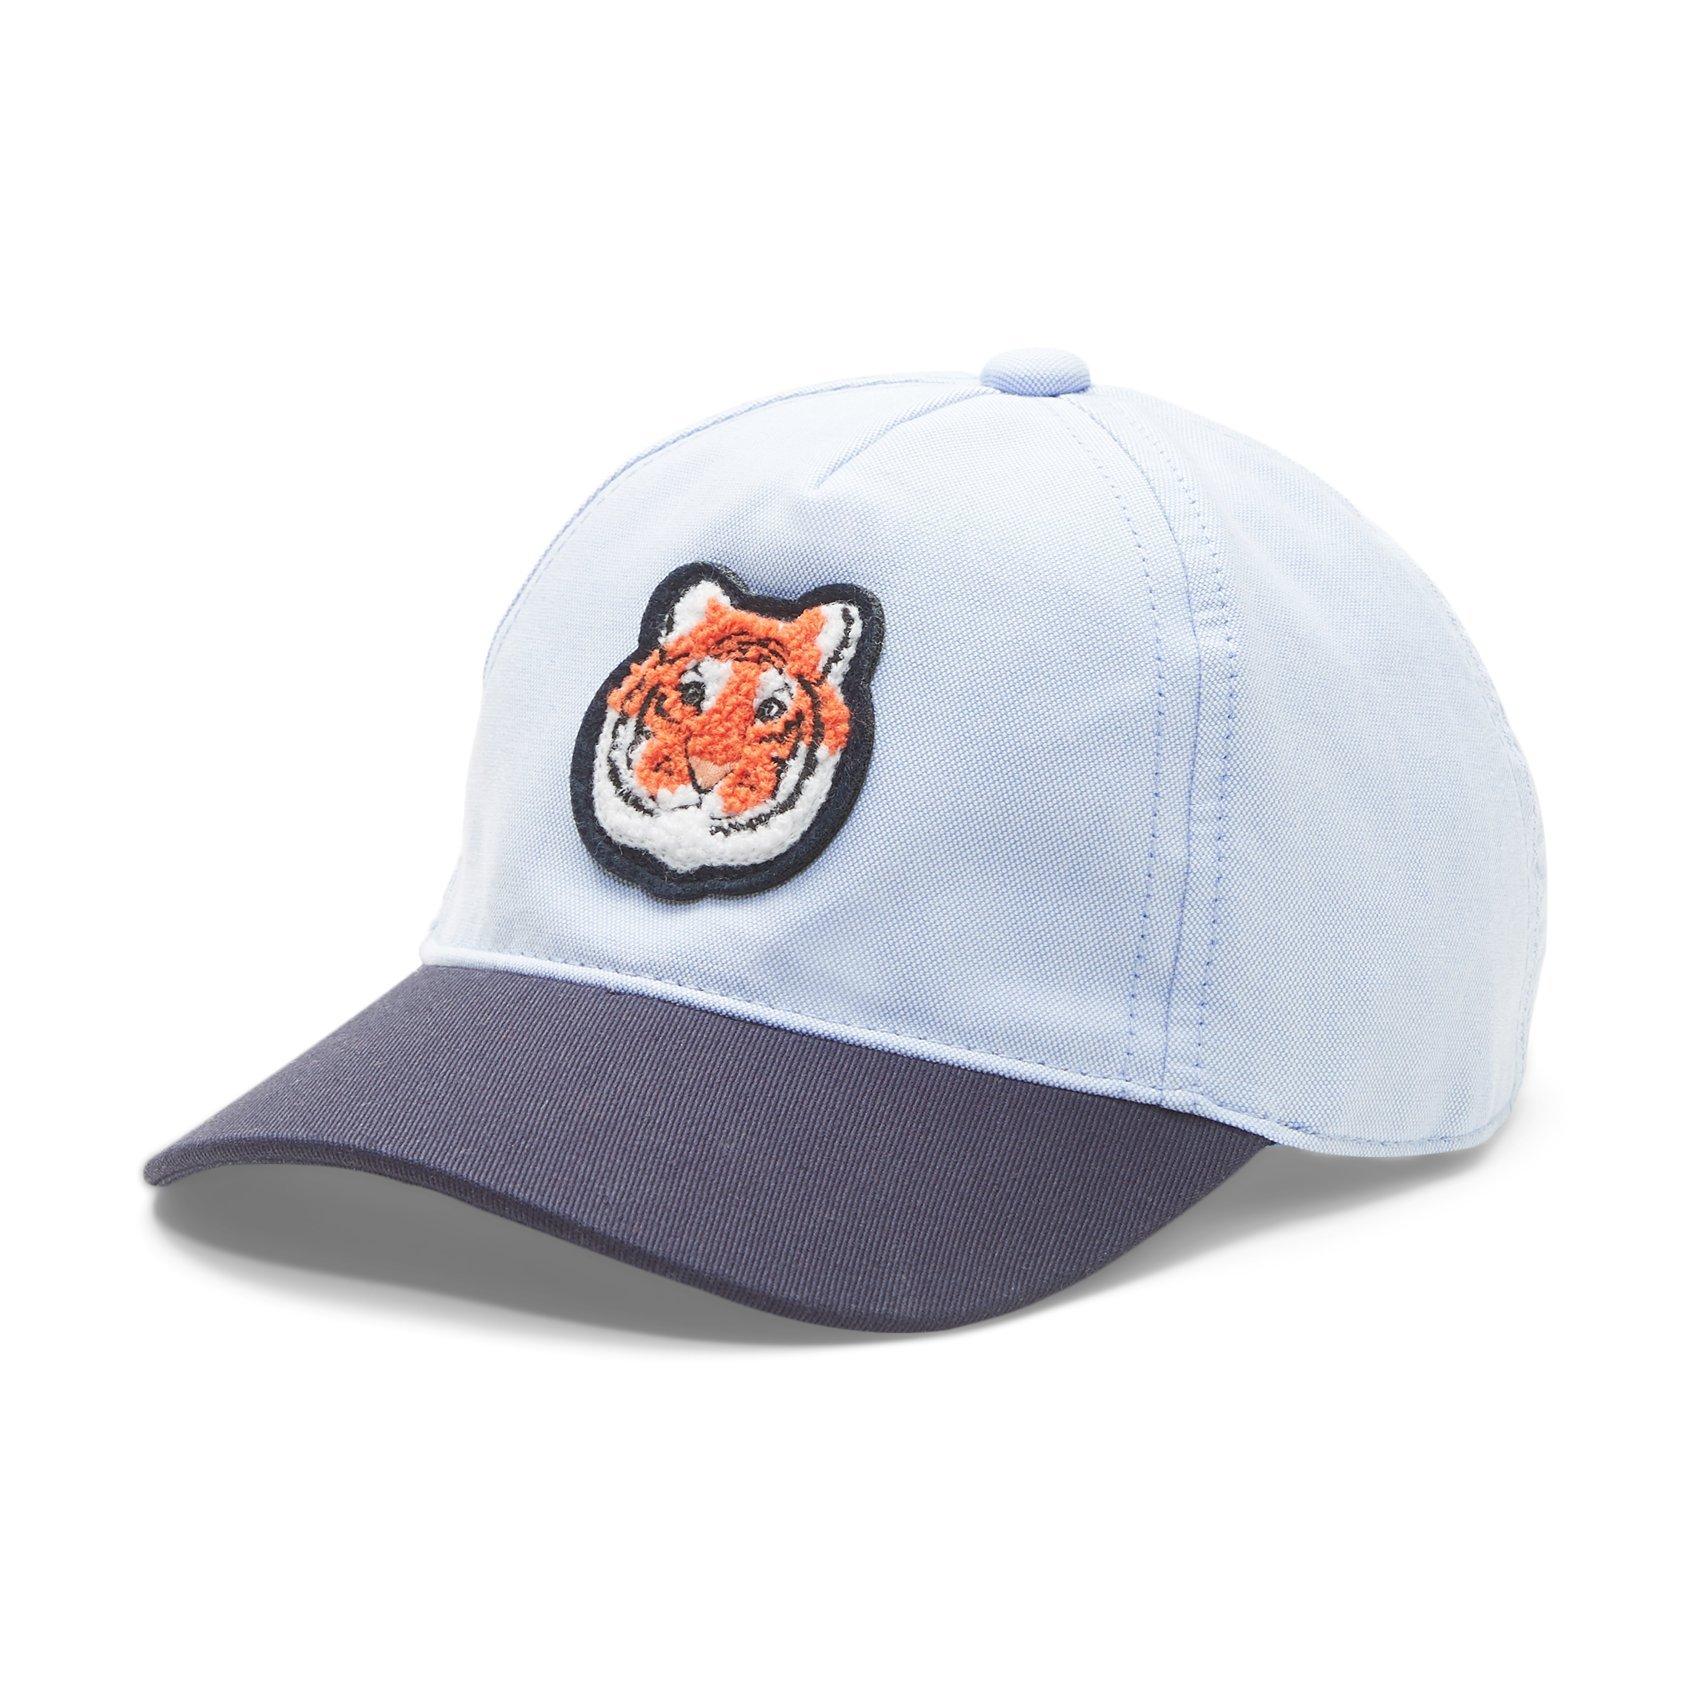 Tiger Patch Cap